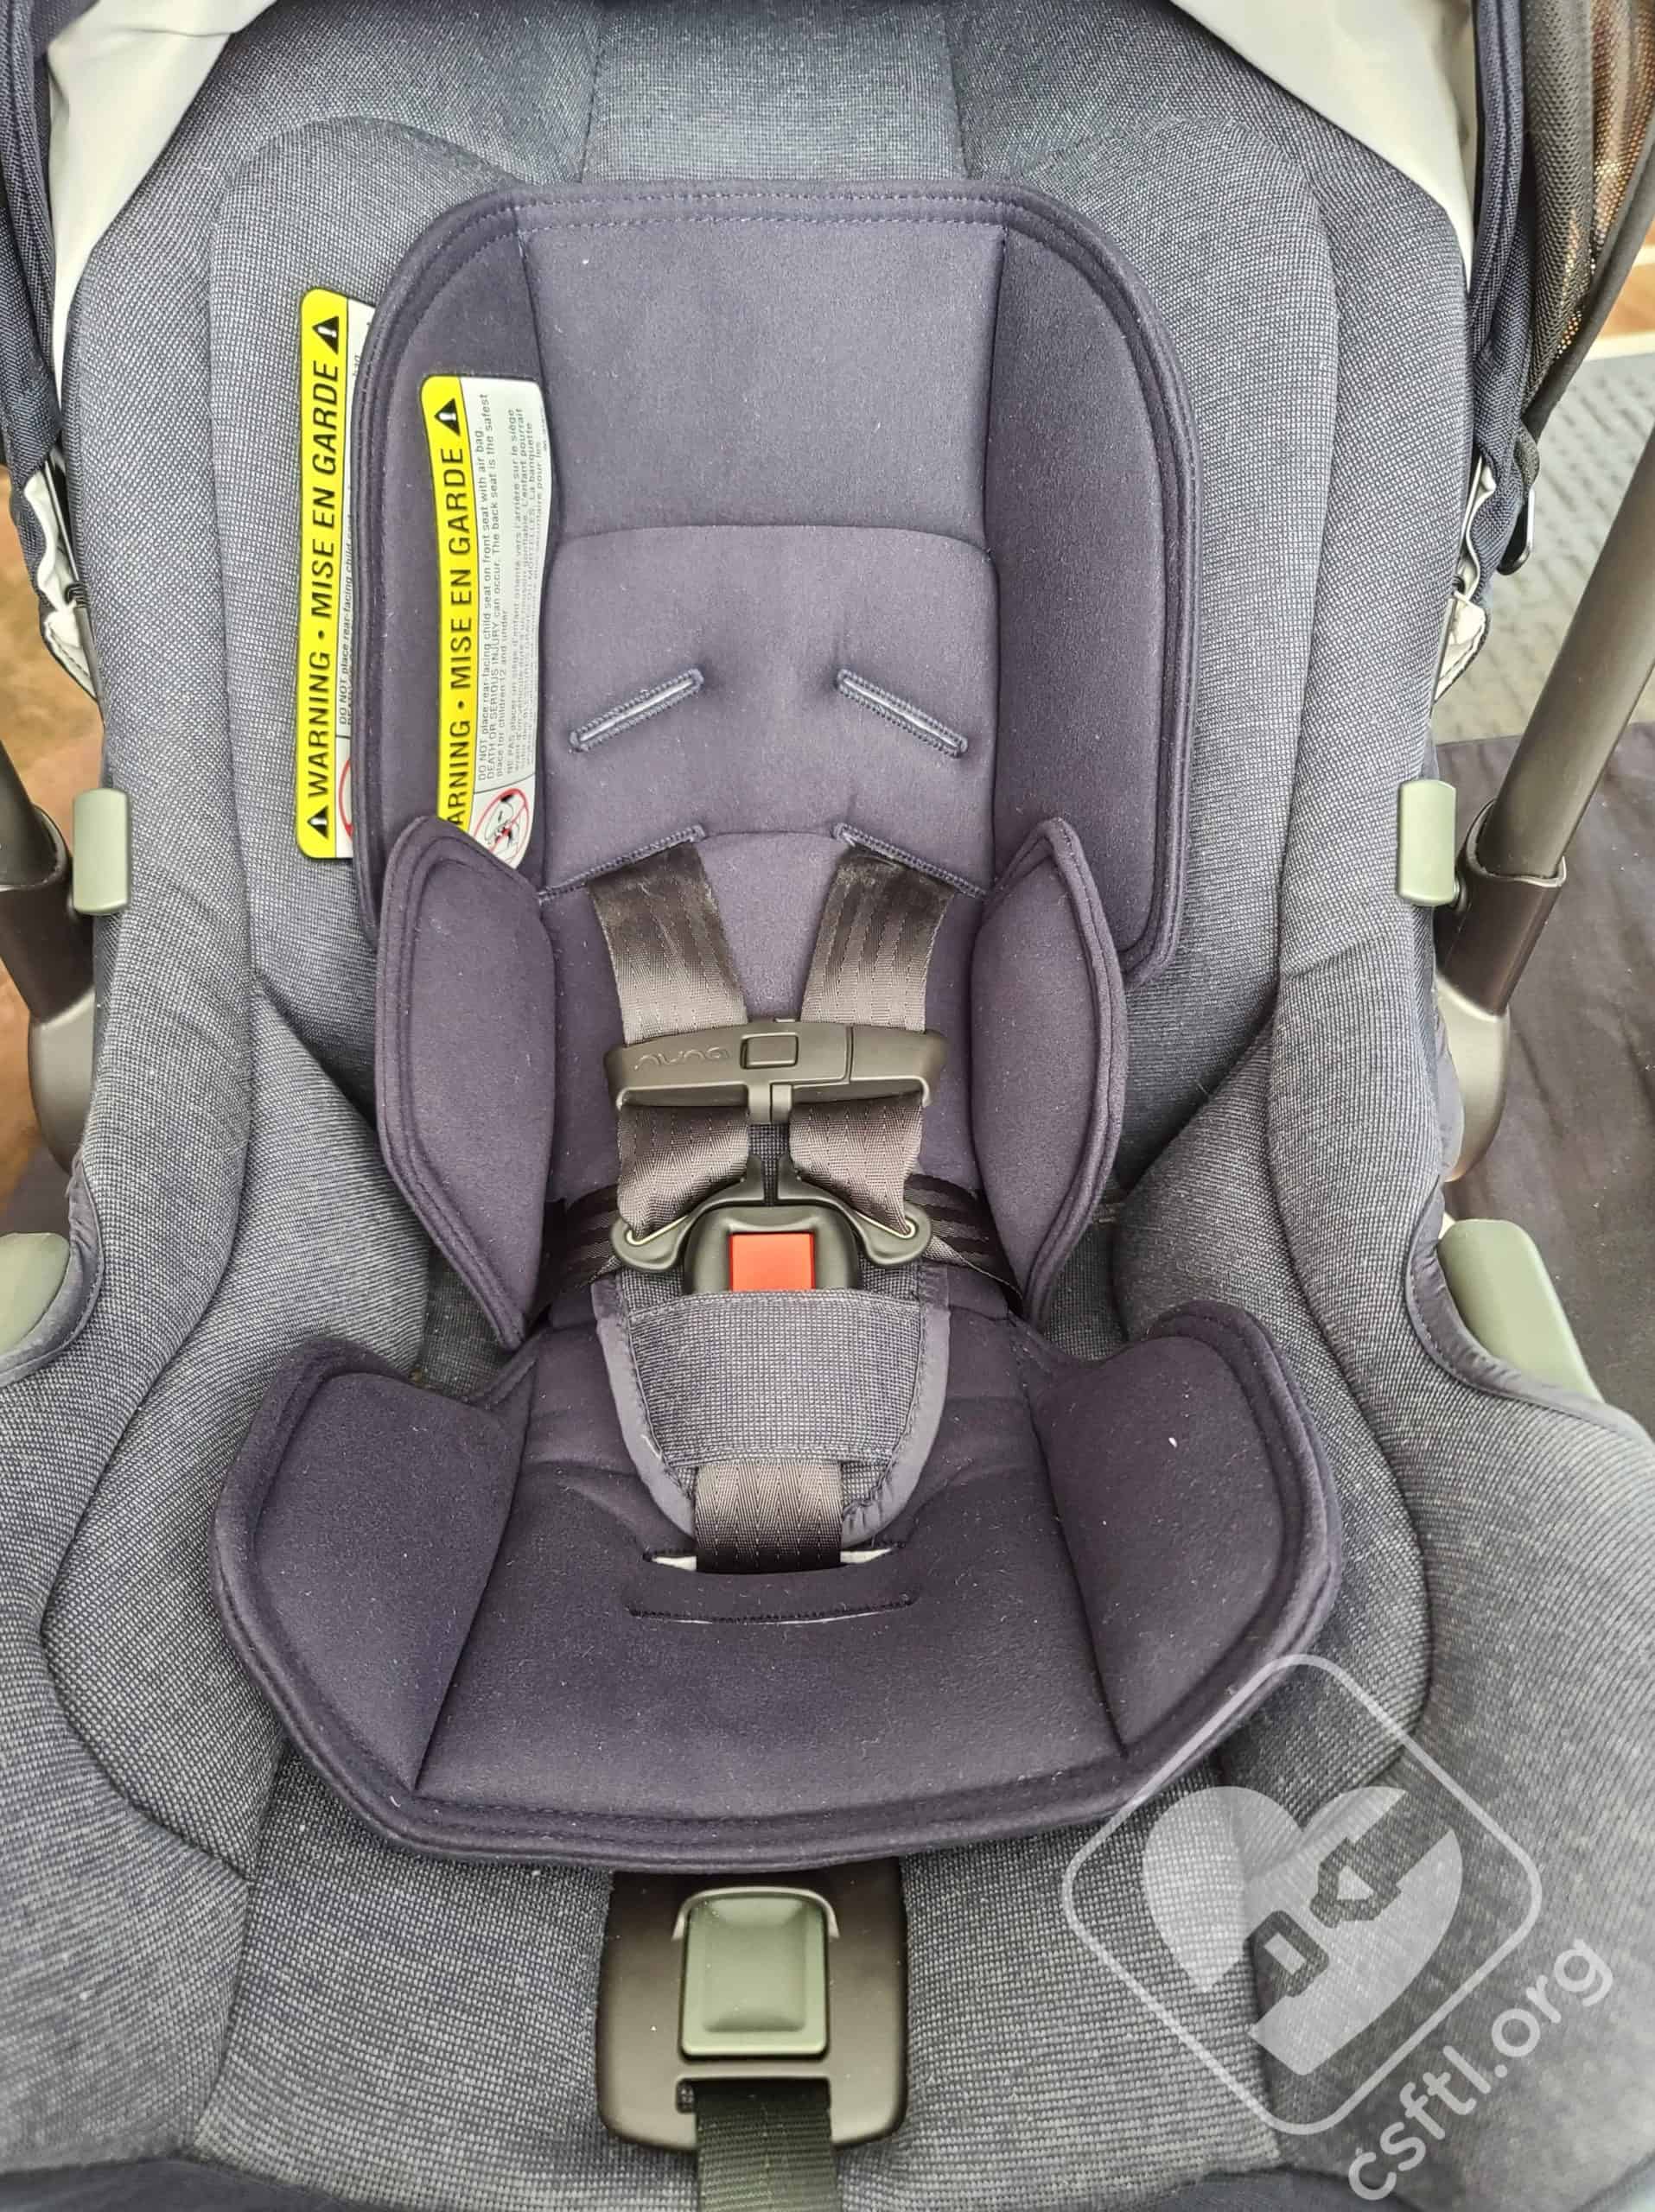 nuna pipa infant car seat canada